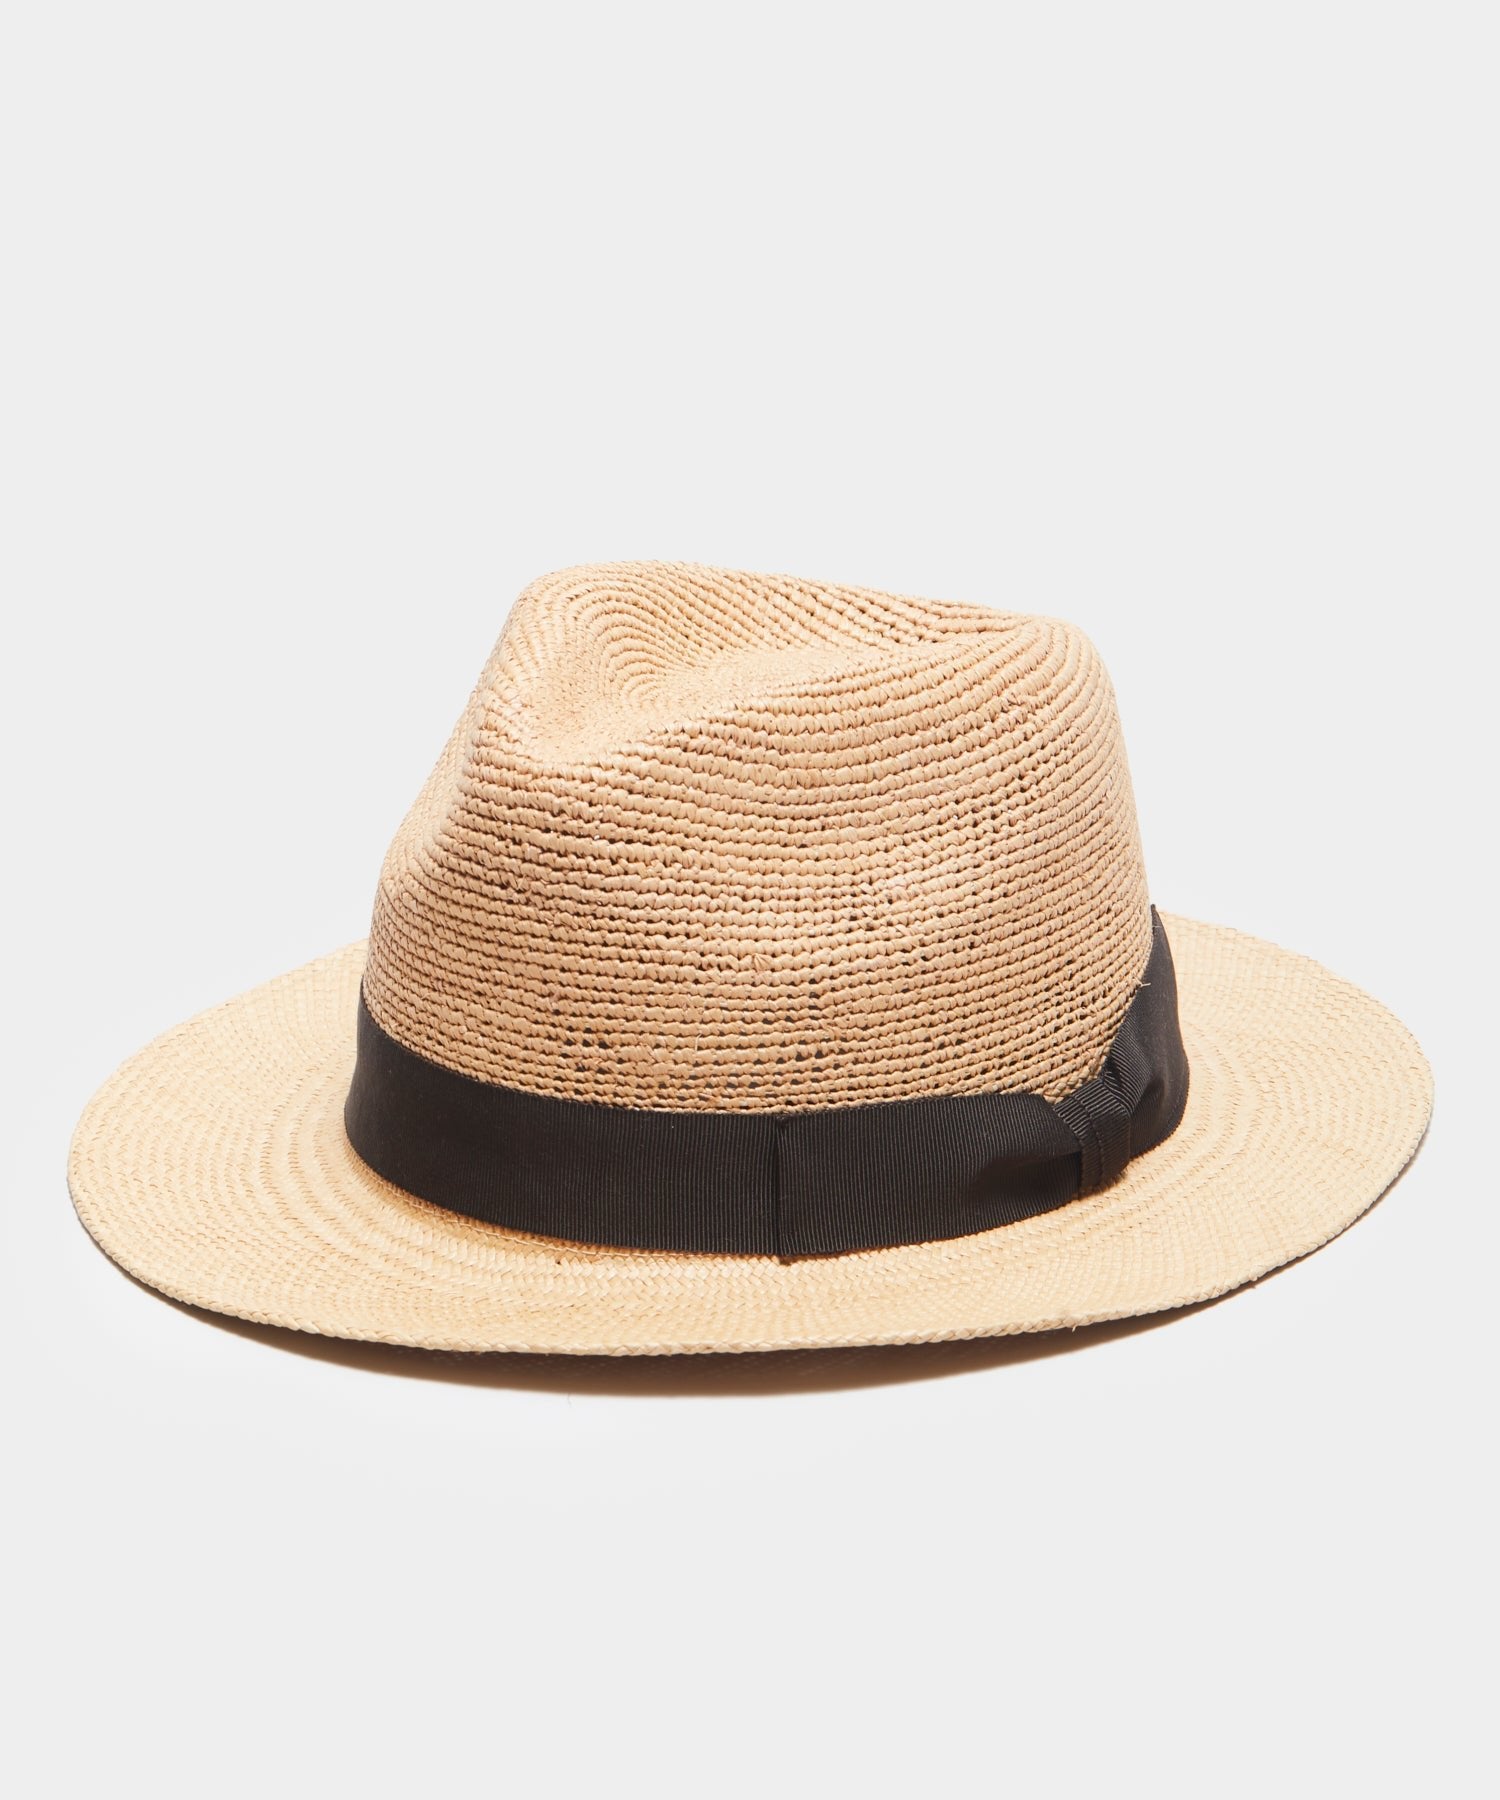 Câbleami Panama Hat with a Brown Hatband